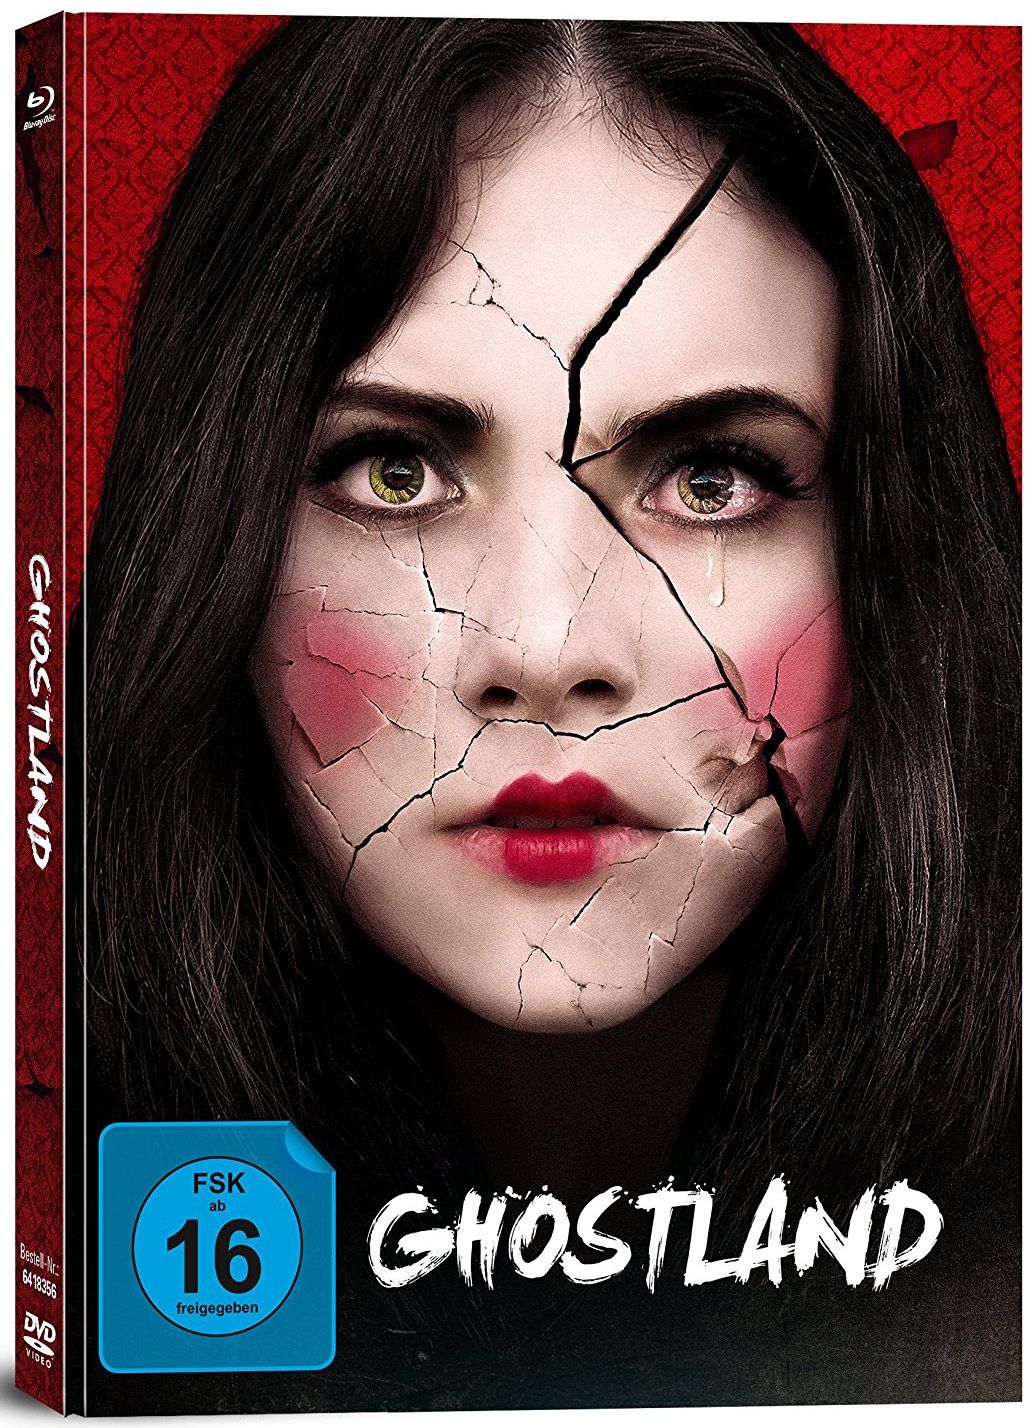 Ghostland (Lim. Uncut Mediabook) (DVD + BLURAY)